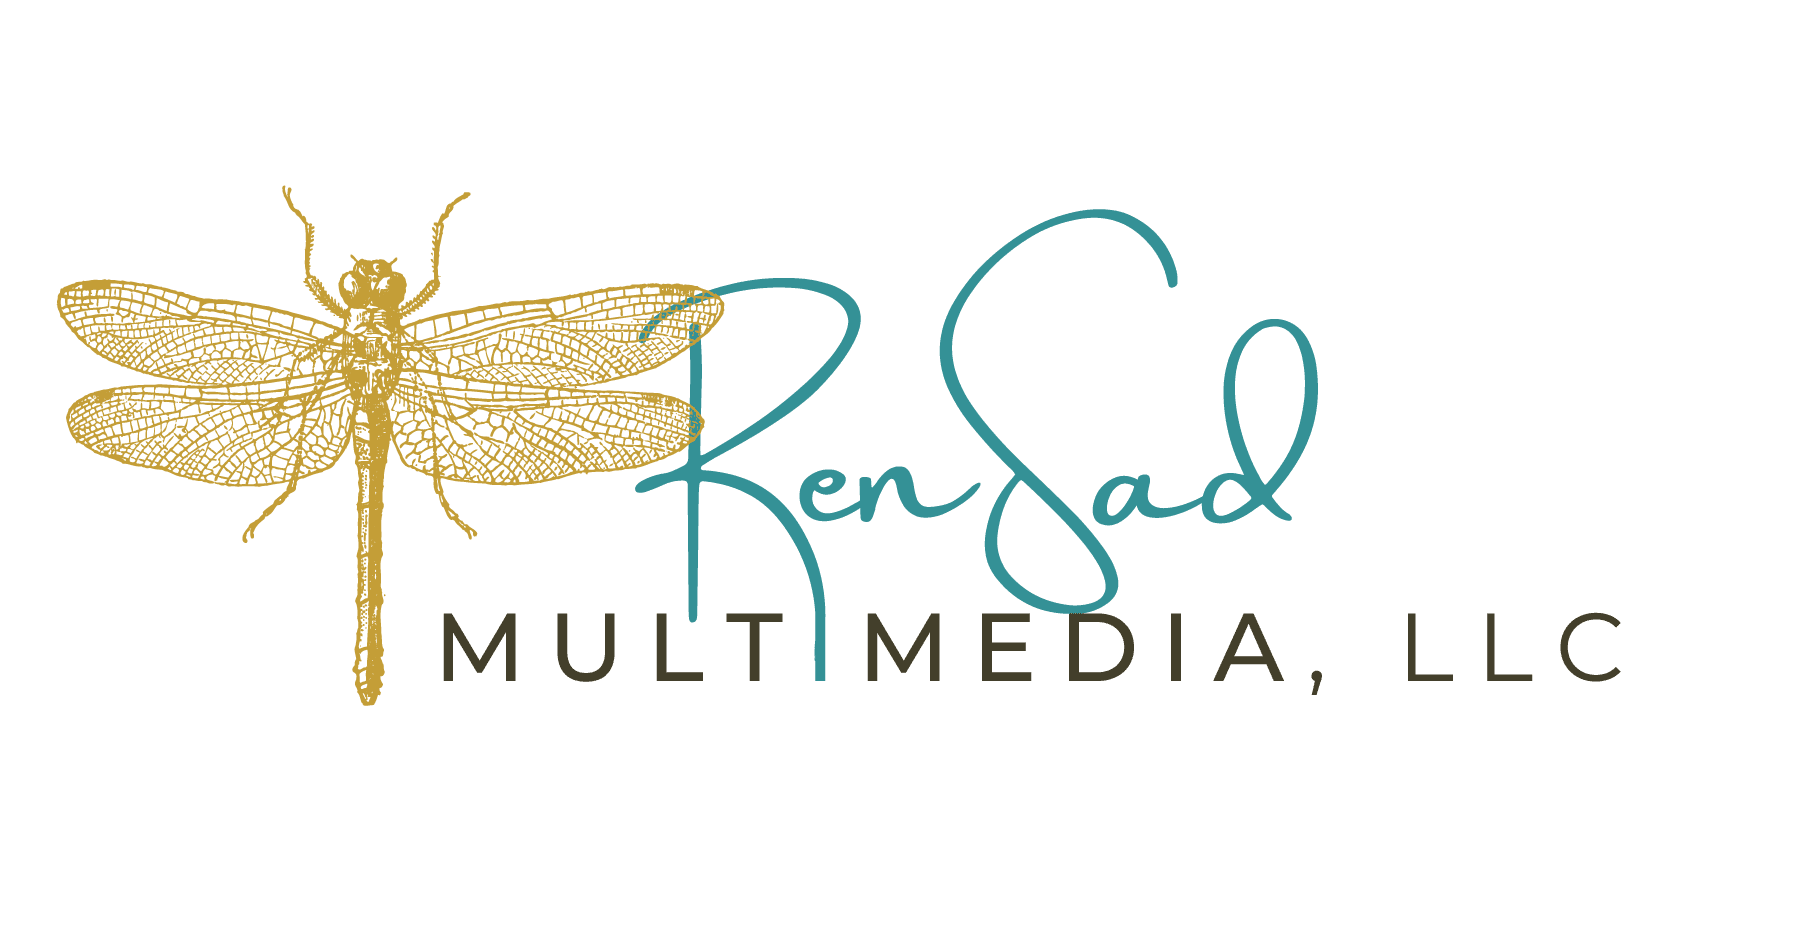 RenSad Multimedia, LLC